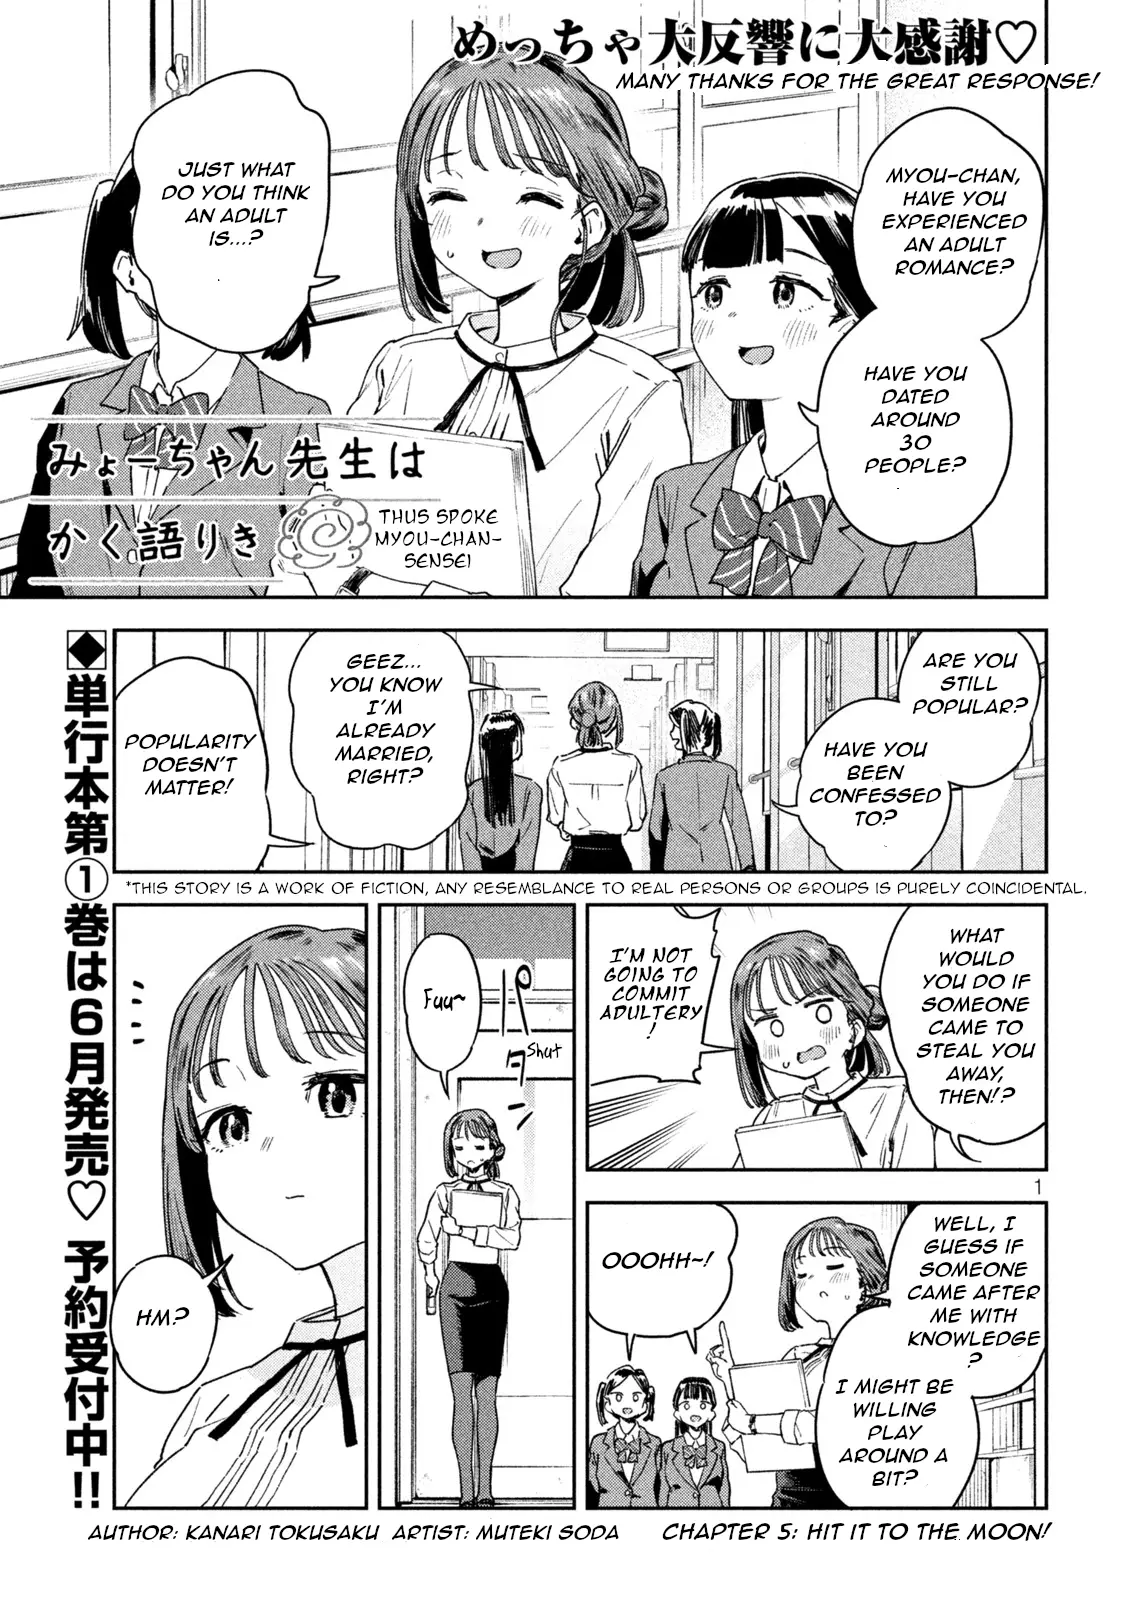 Miyo-Chan Sensei Said So - 5 page 1-391ce6fe